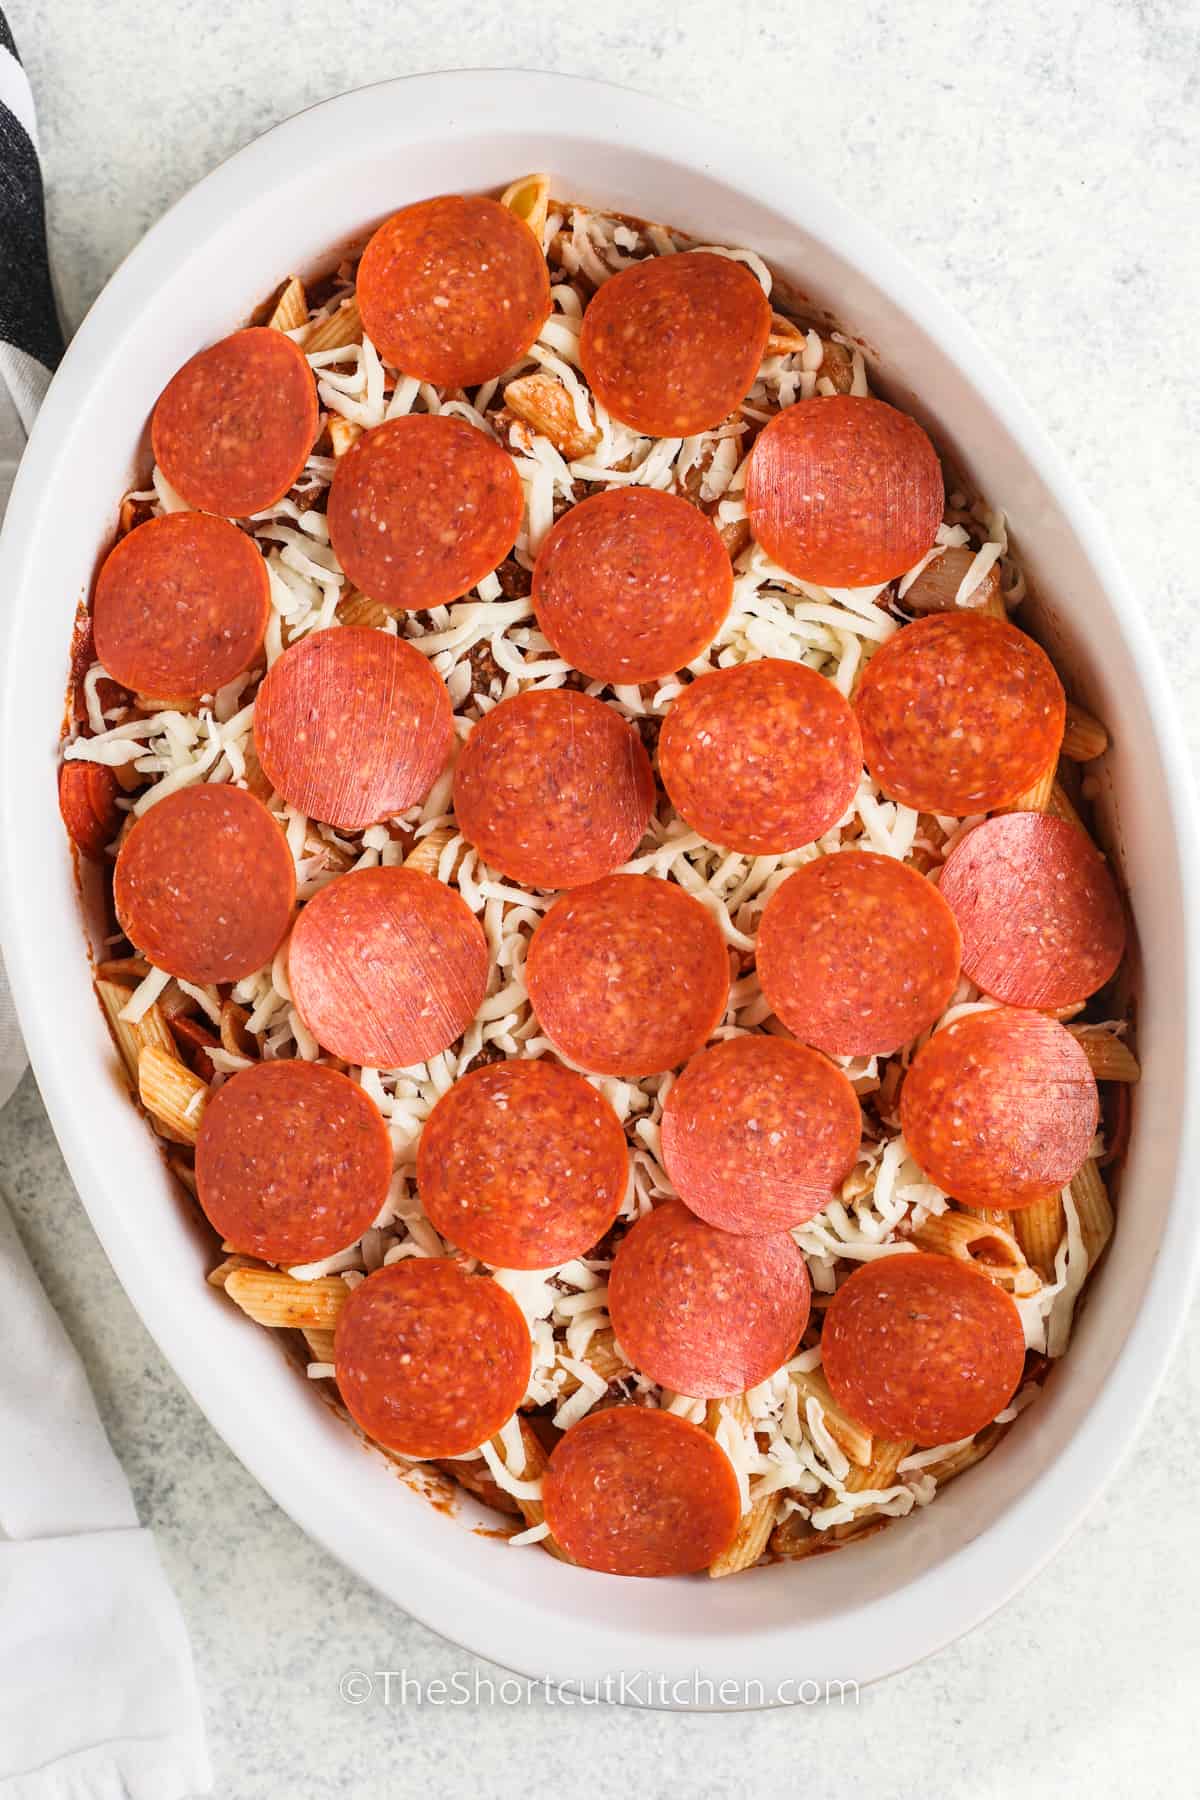 Pizza pasta bake assembled in a casserole dish